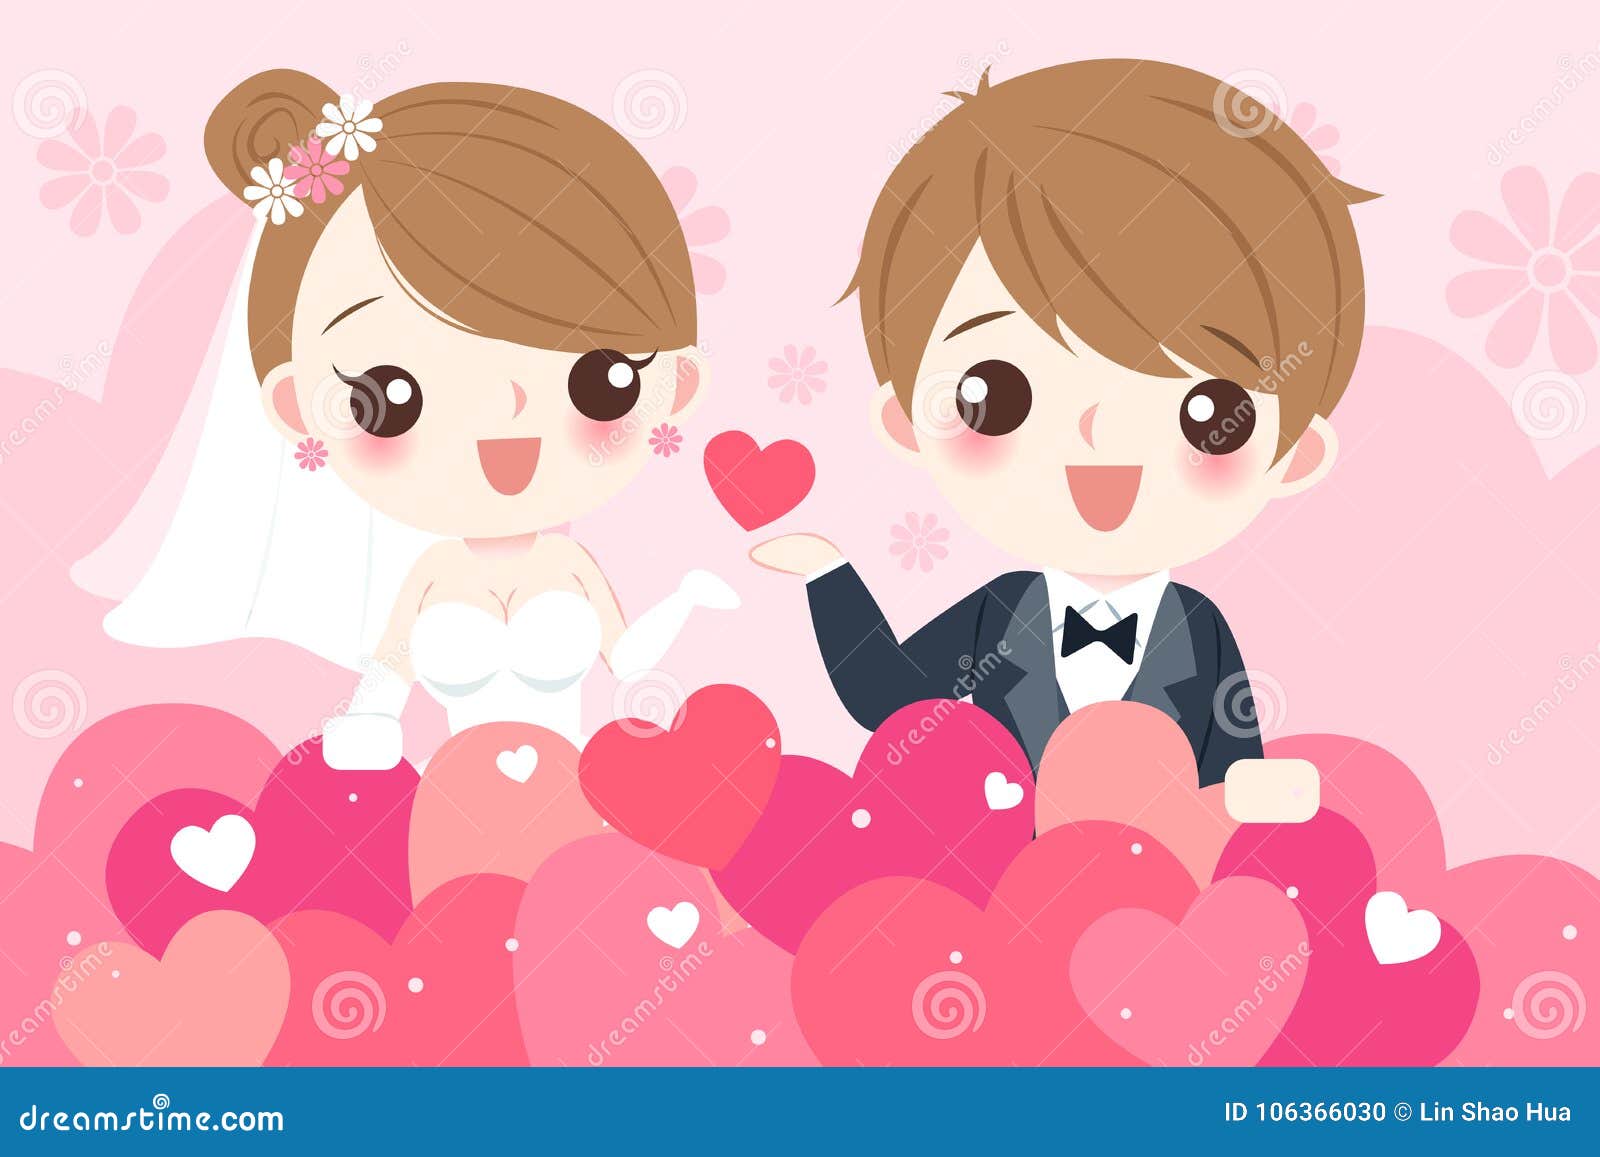 Cartoon wedding people stock vector. Illustration of cute - 106366030